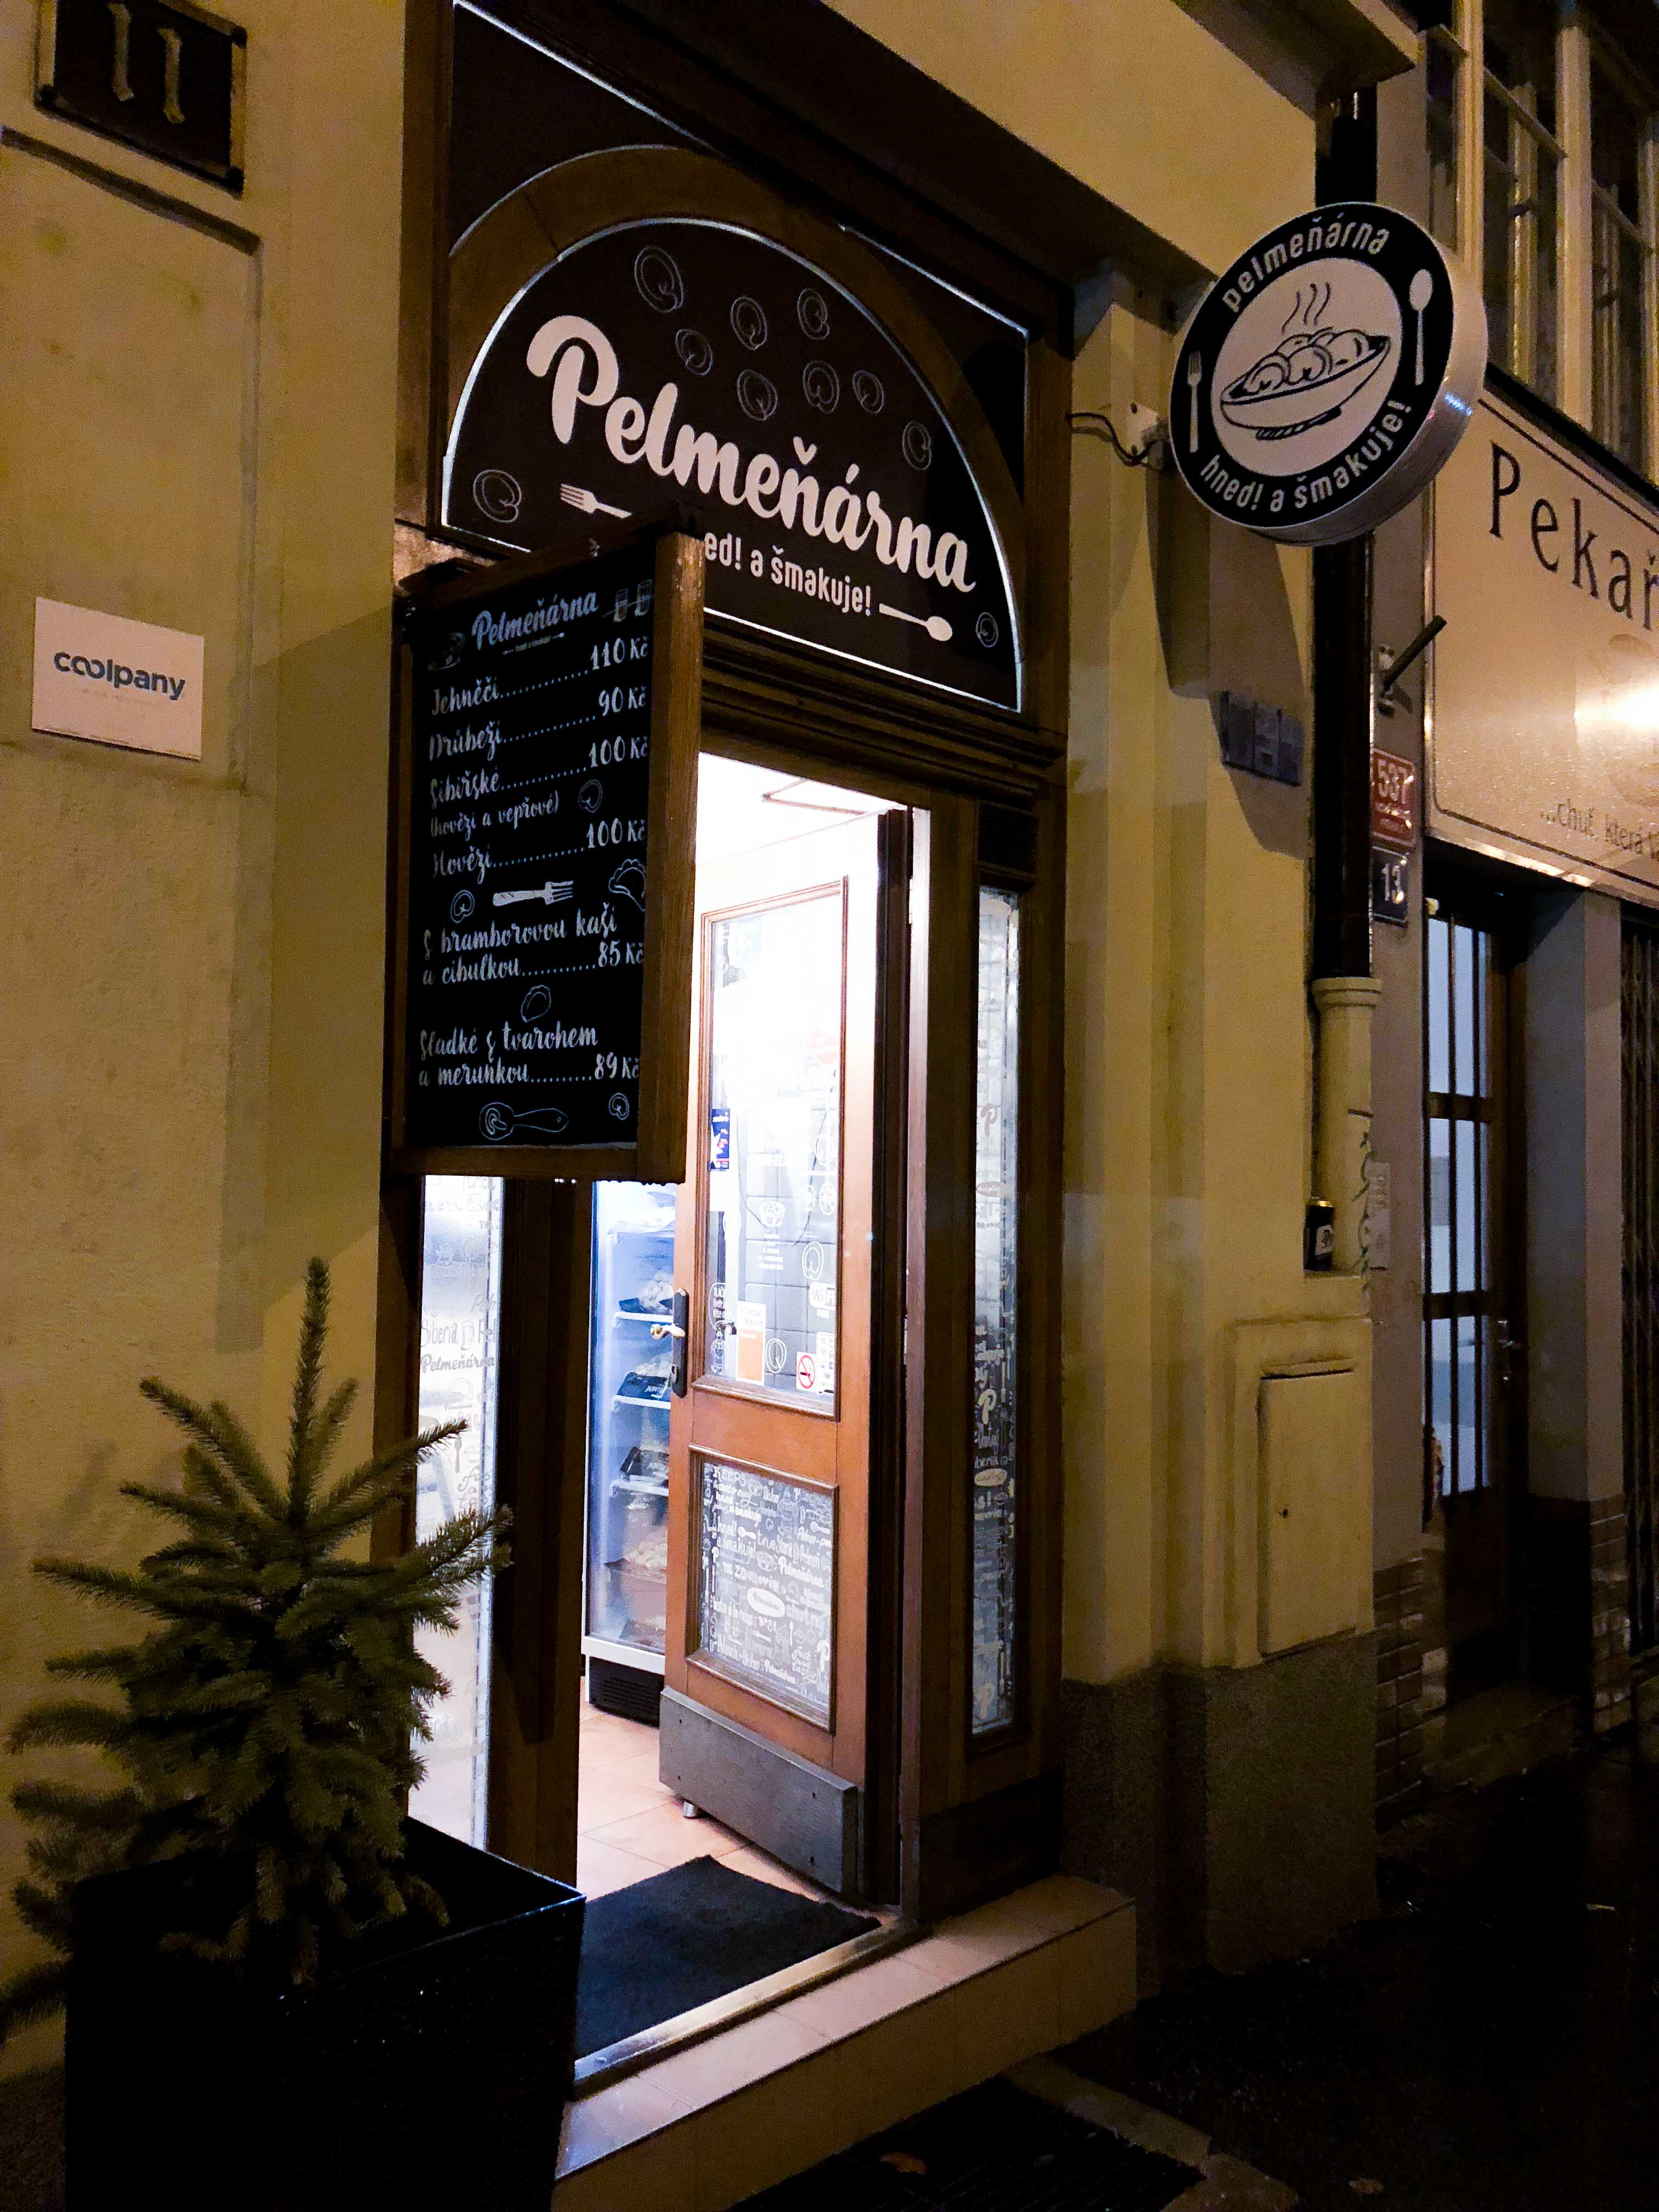 Pelmeneria Pelmeňárna Teigtaschen Restaurant Insider Tipps Prag Food Tipps besten Restaurants Reiseblog Pelmeni Prague